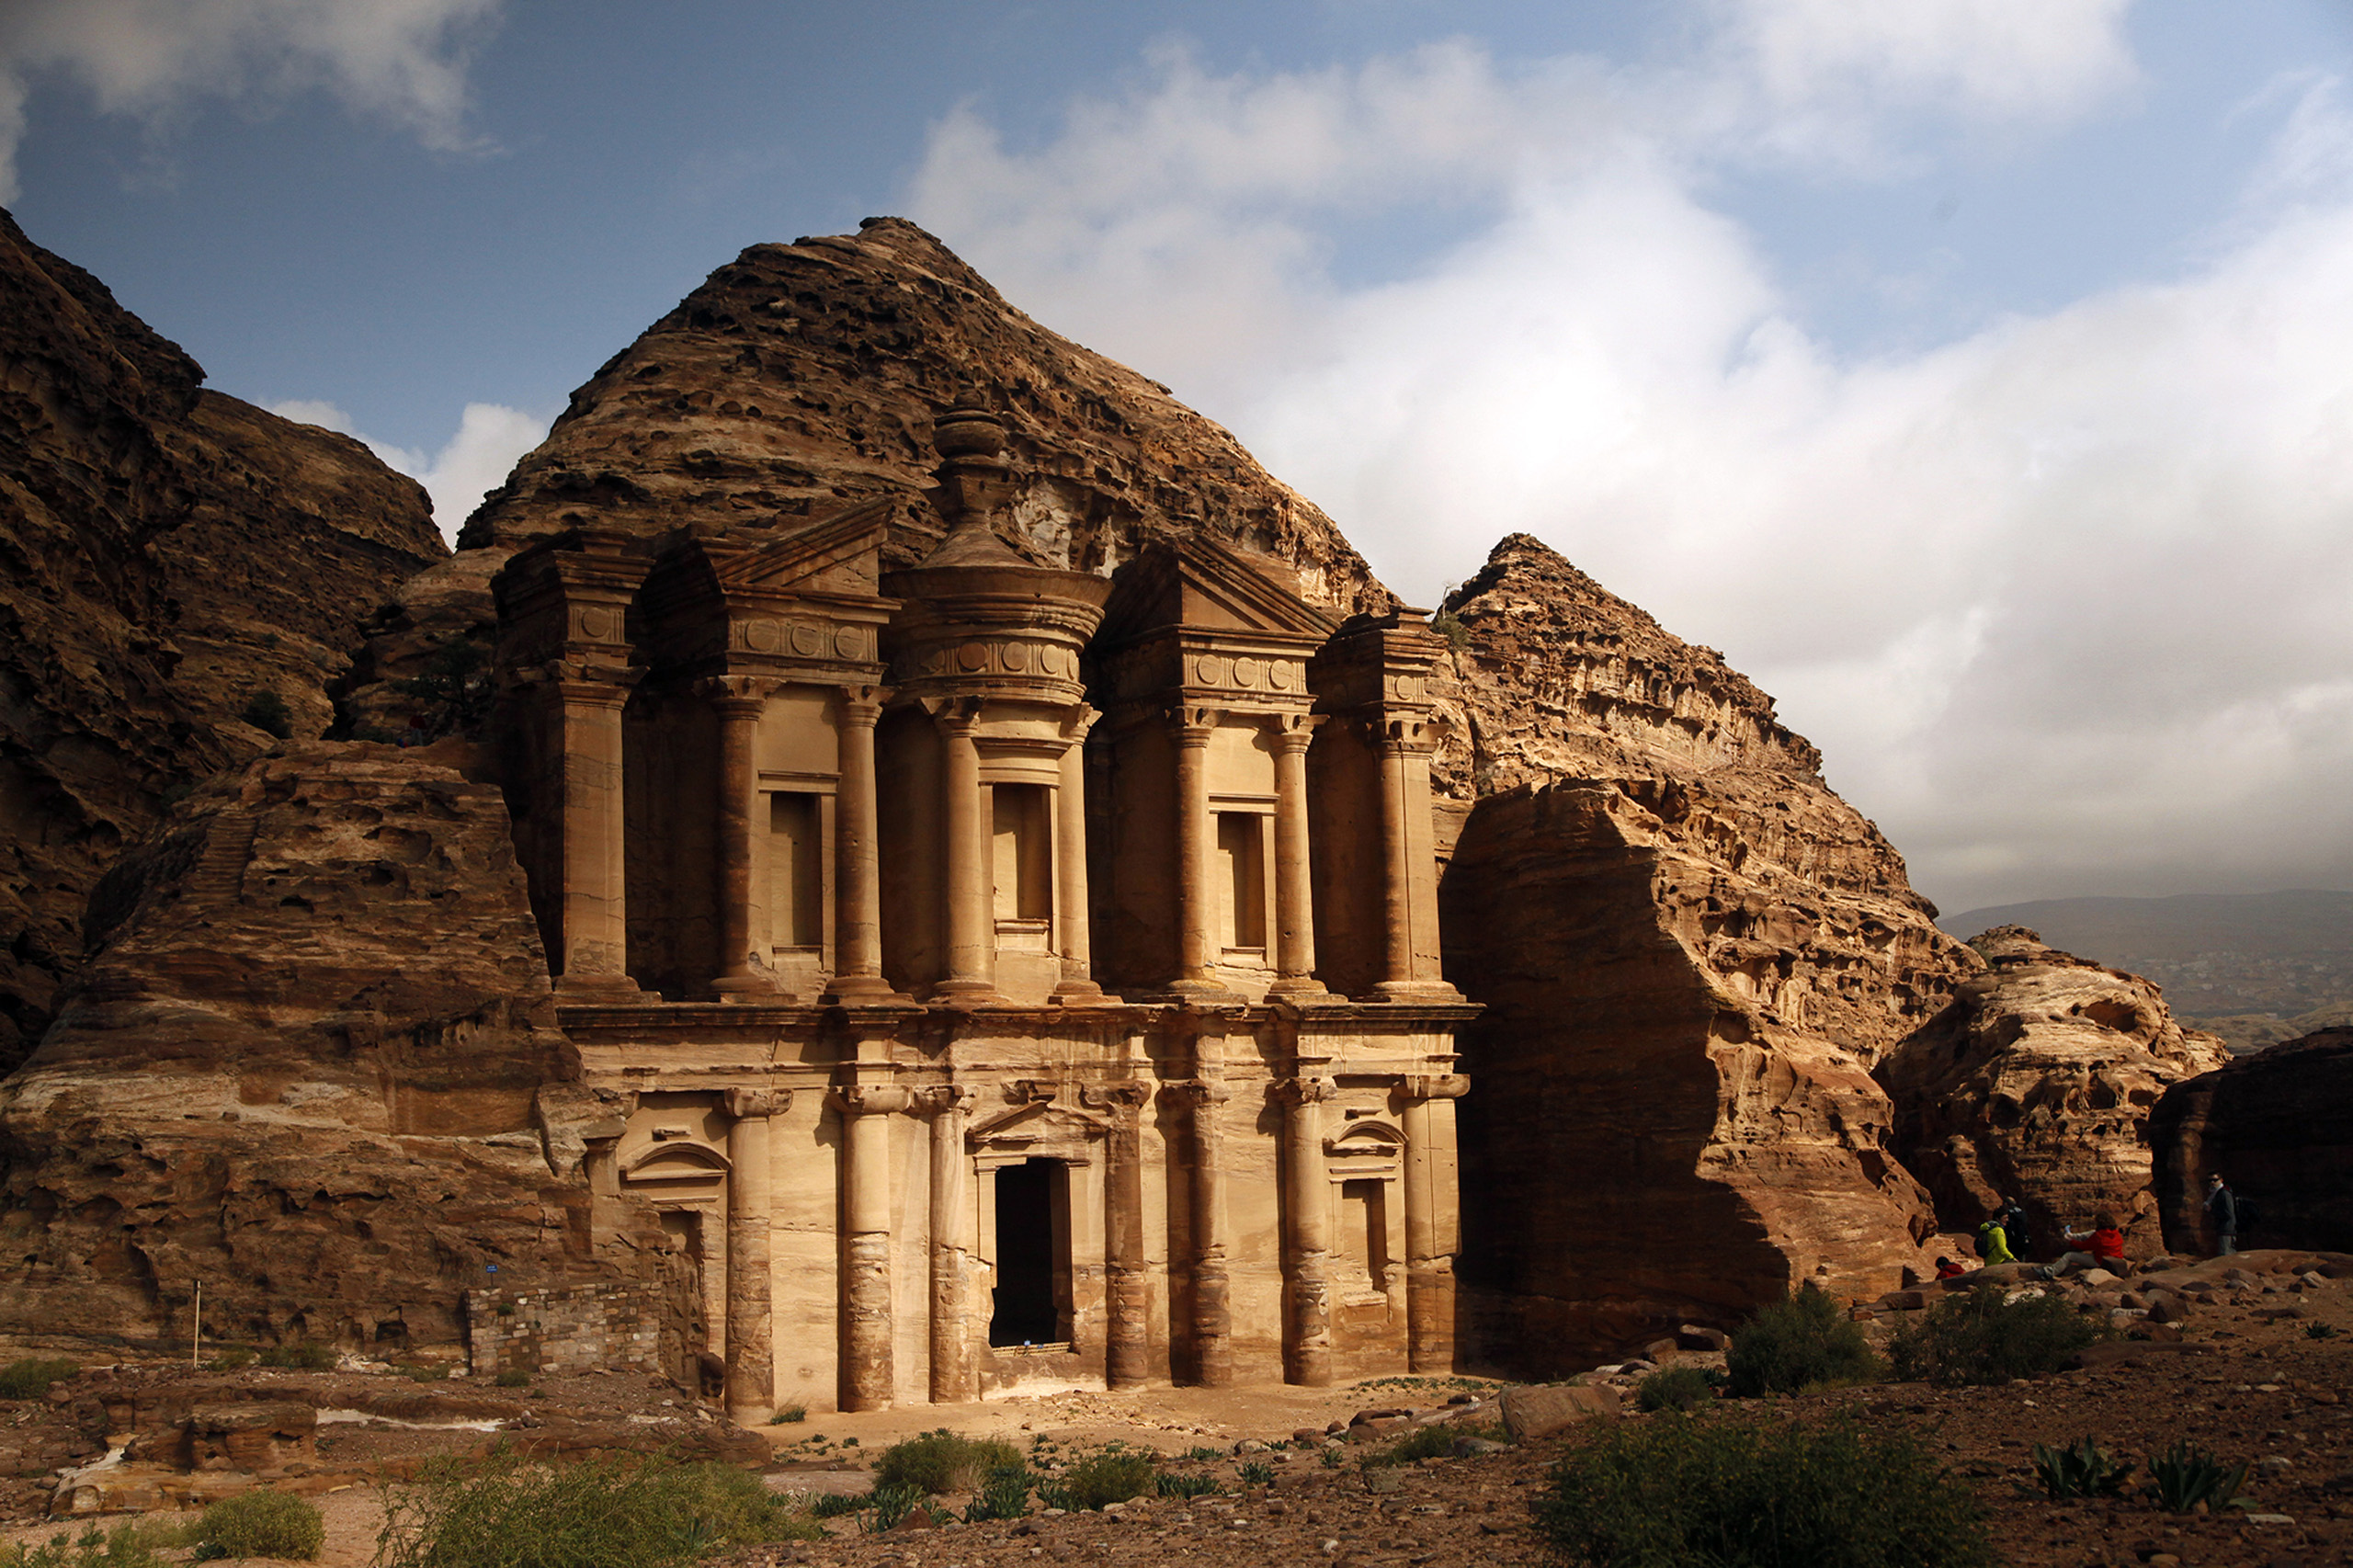 The monastery in Petra, a world famous landmark in southern Jordan, on Feb. 23, 2016. (Sam McNeil—AP)